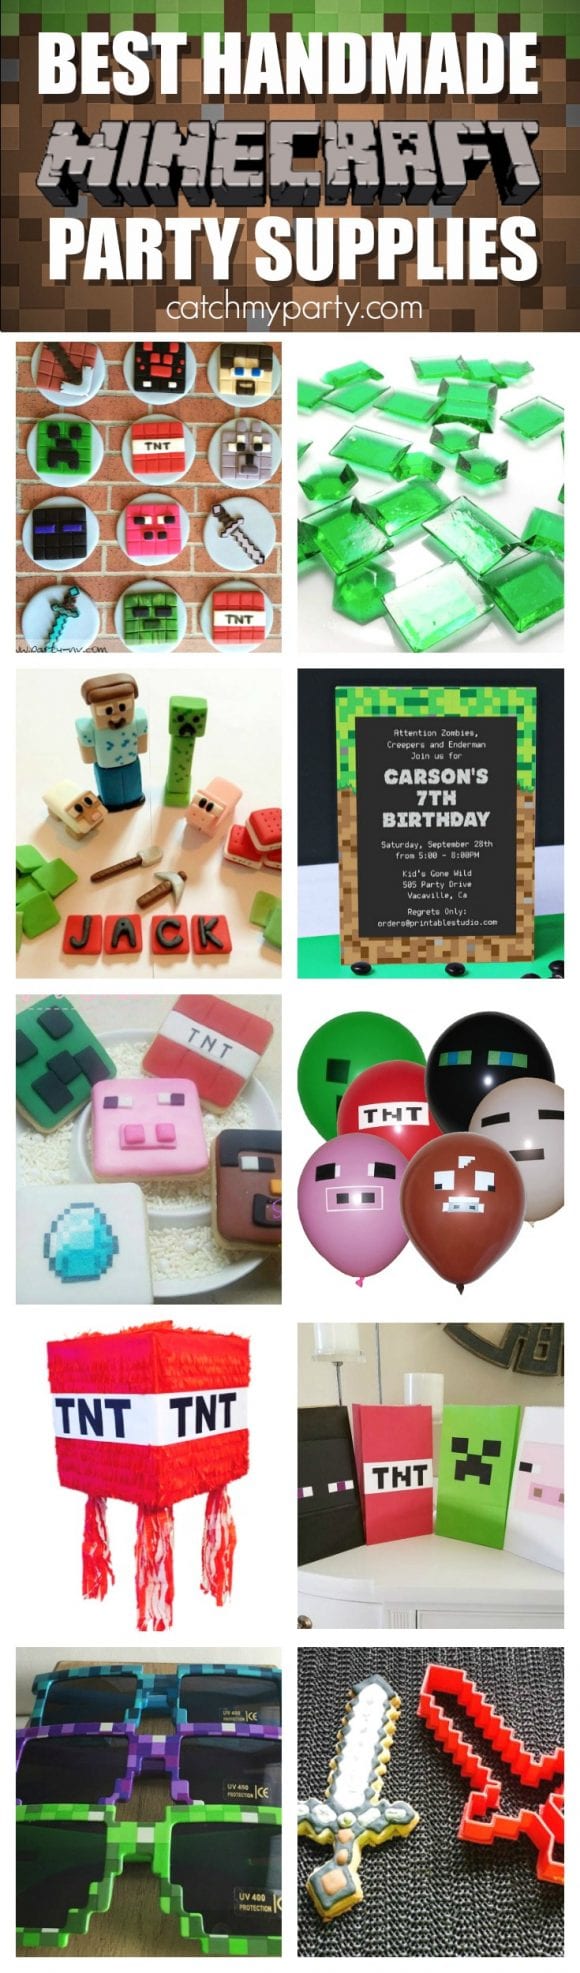 Best Handmade Minecraft Party Supplies | CatchMyparty.com